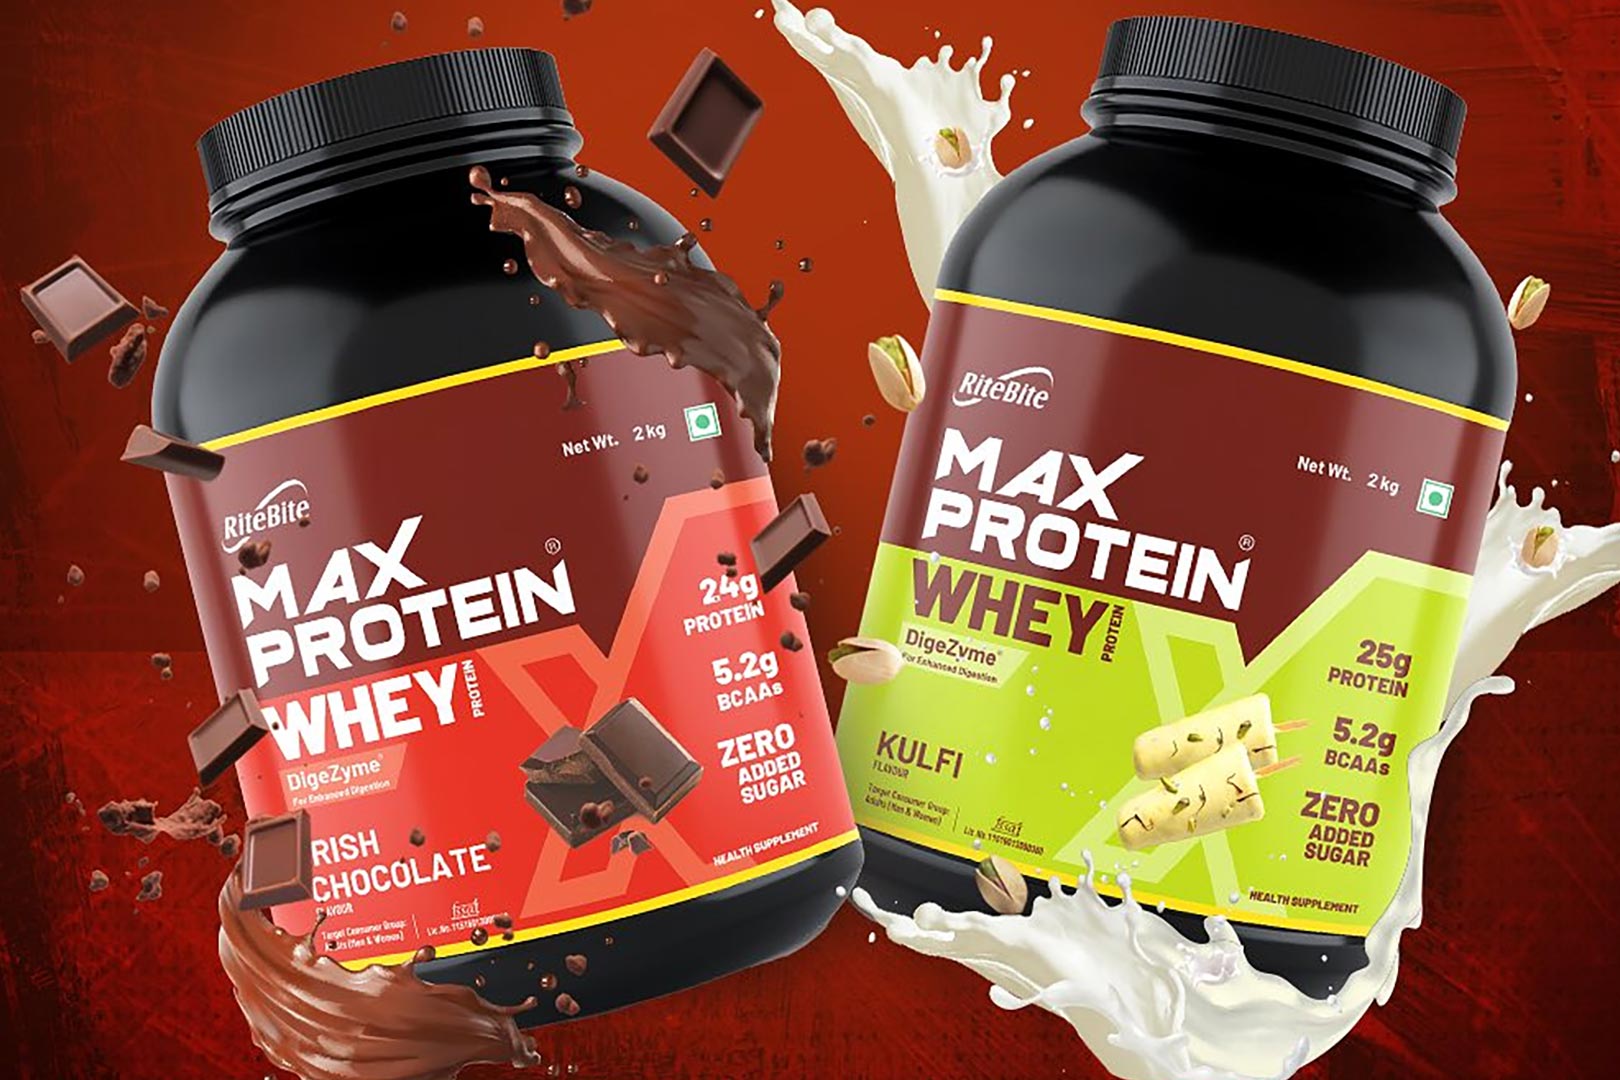 Ritebite Max Protein Whey